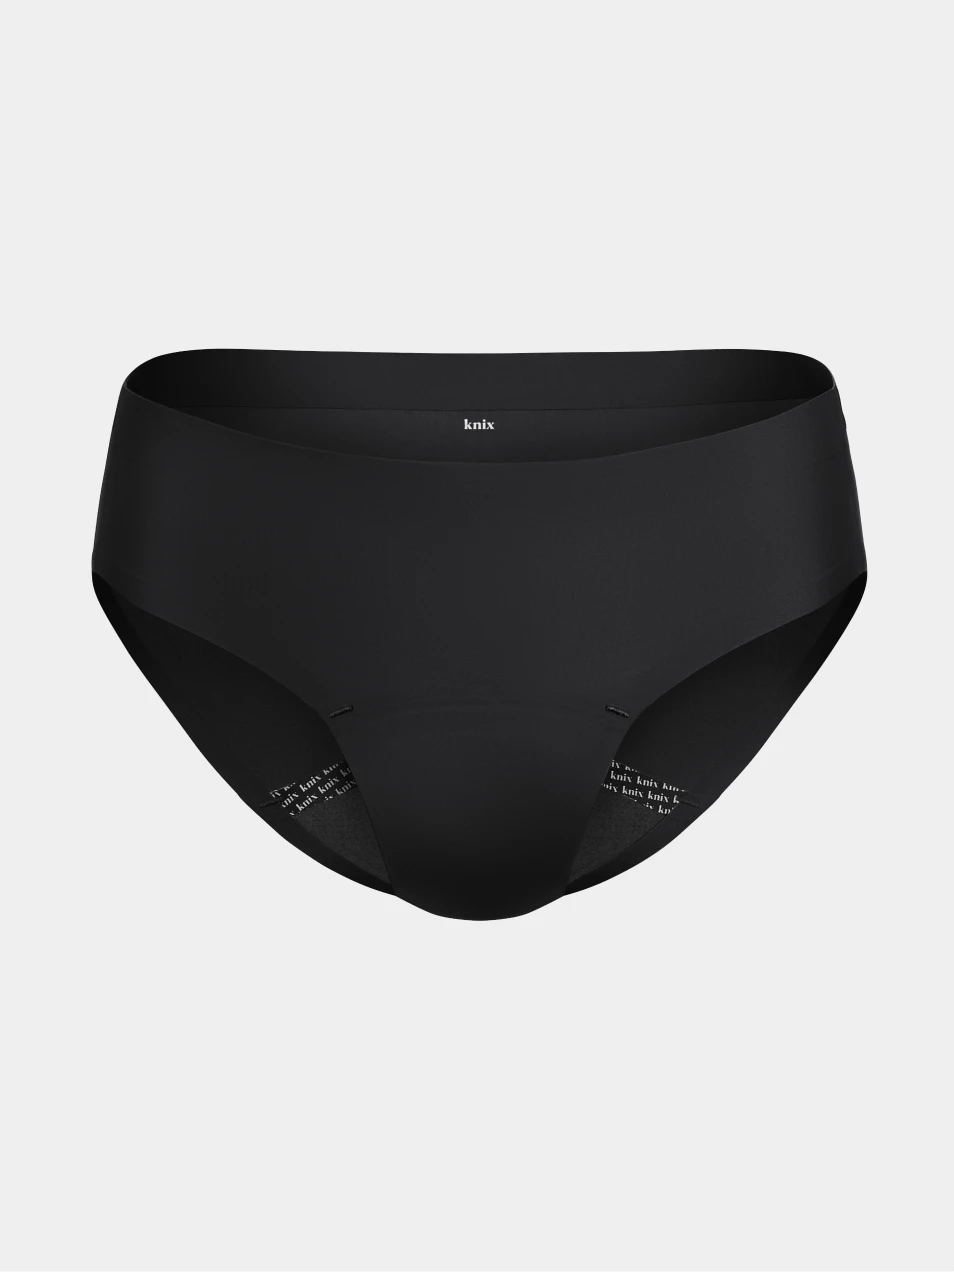 Buy Comfortable Wireless Bras & Seamless Underwear Online - Knix